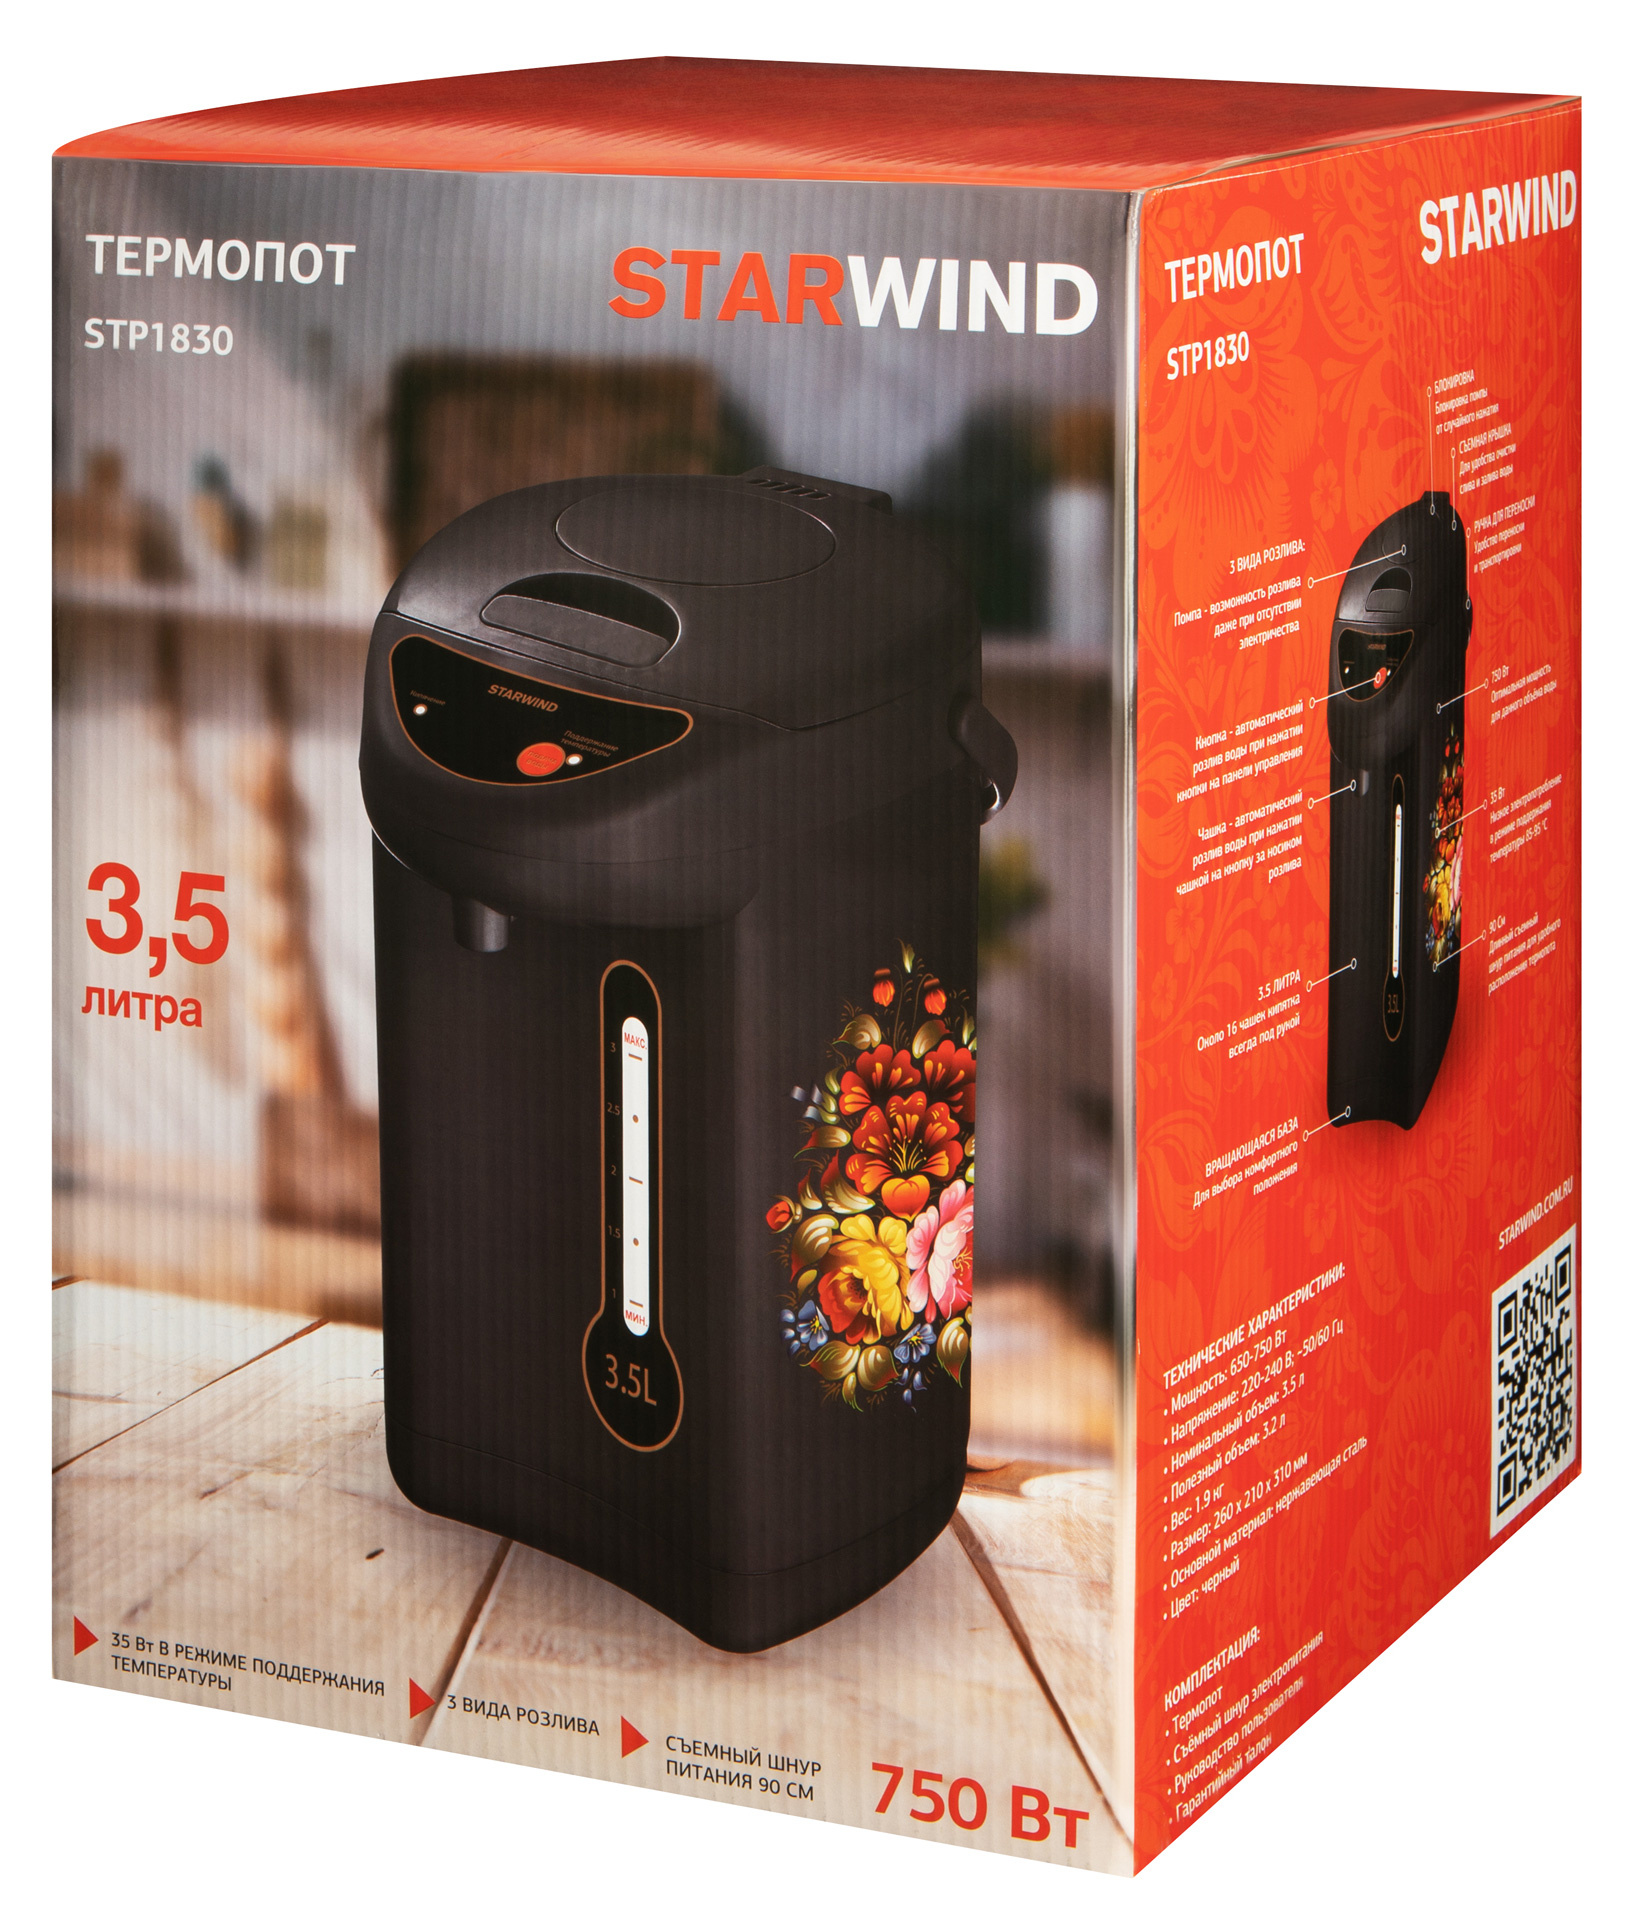 Термопот Starwind STP1830 черный от магазина Старвинд